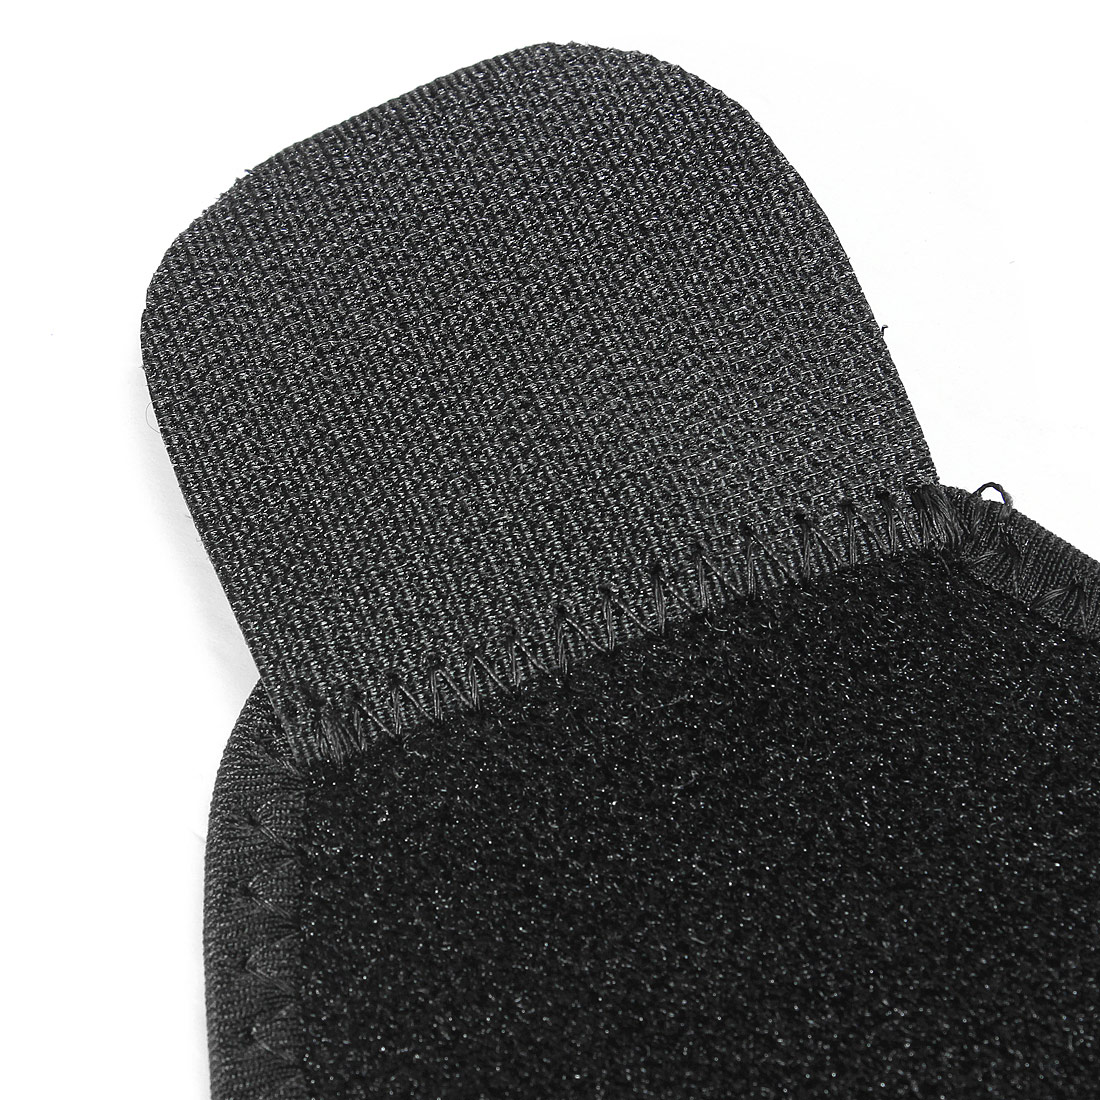 Finger-Wrist-Support-Unisex-Sports-Clothing-Gloves-926782-6